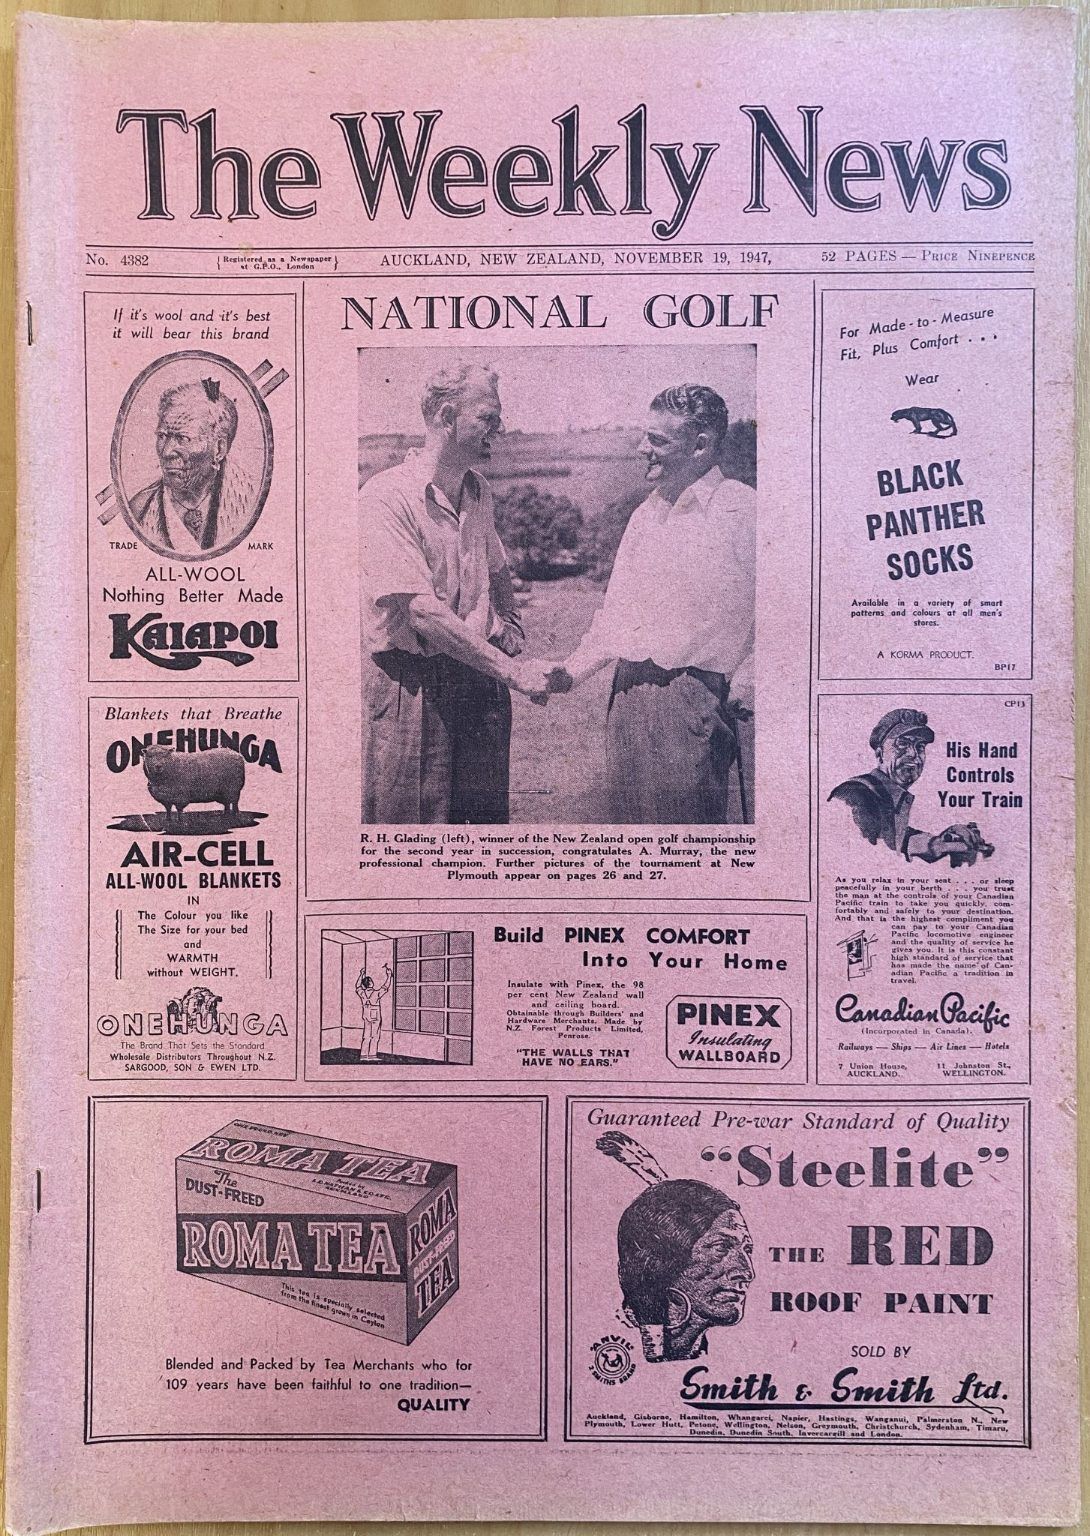 OLD NEWSPAPER: The Weekly News, No. 4382, 19 November 1947